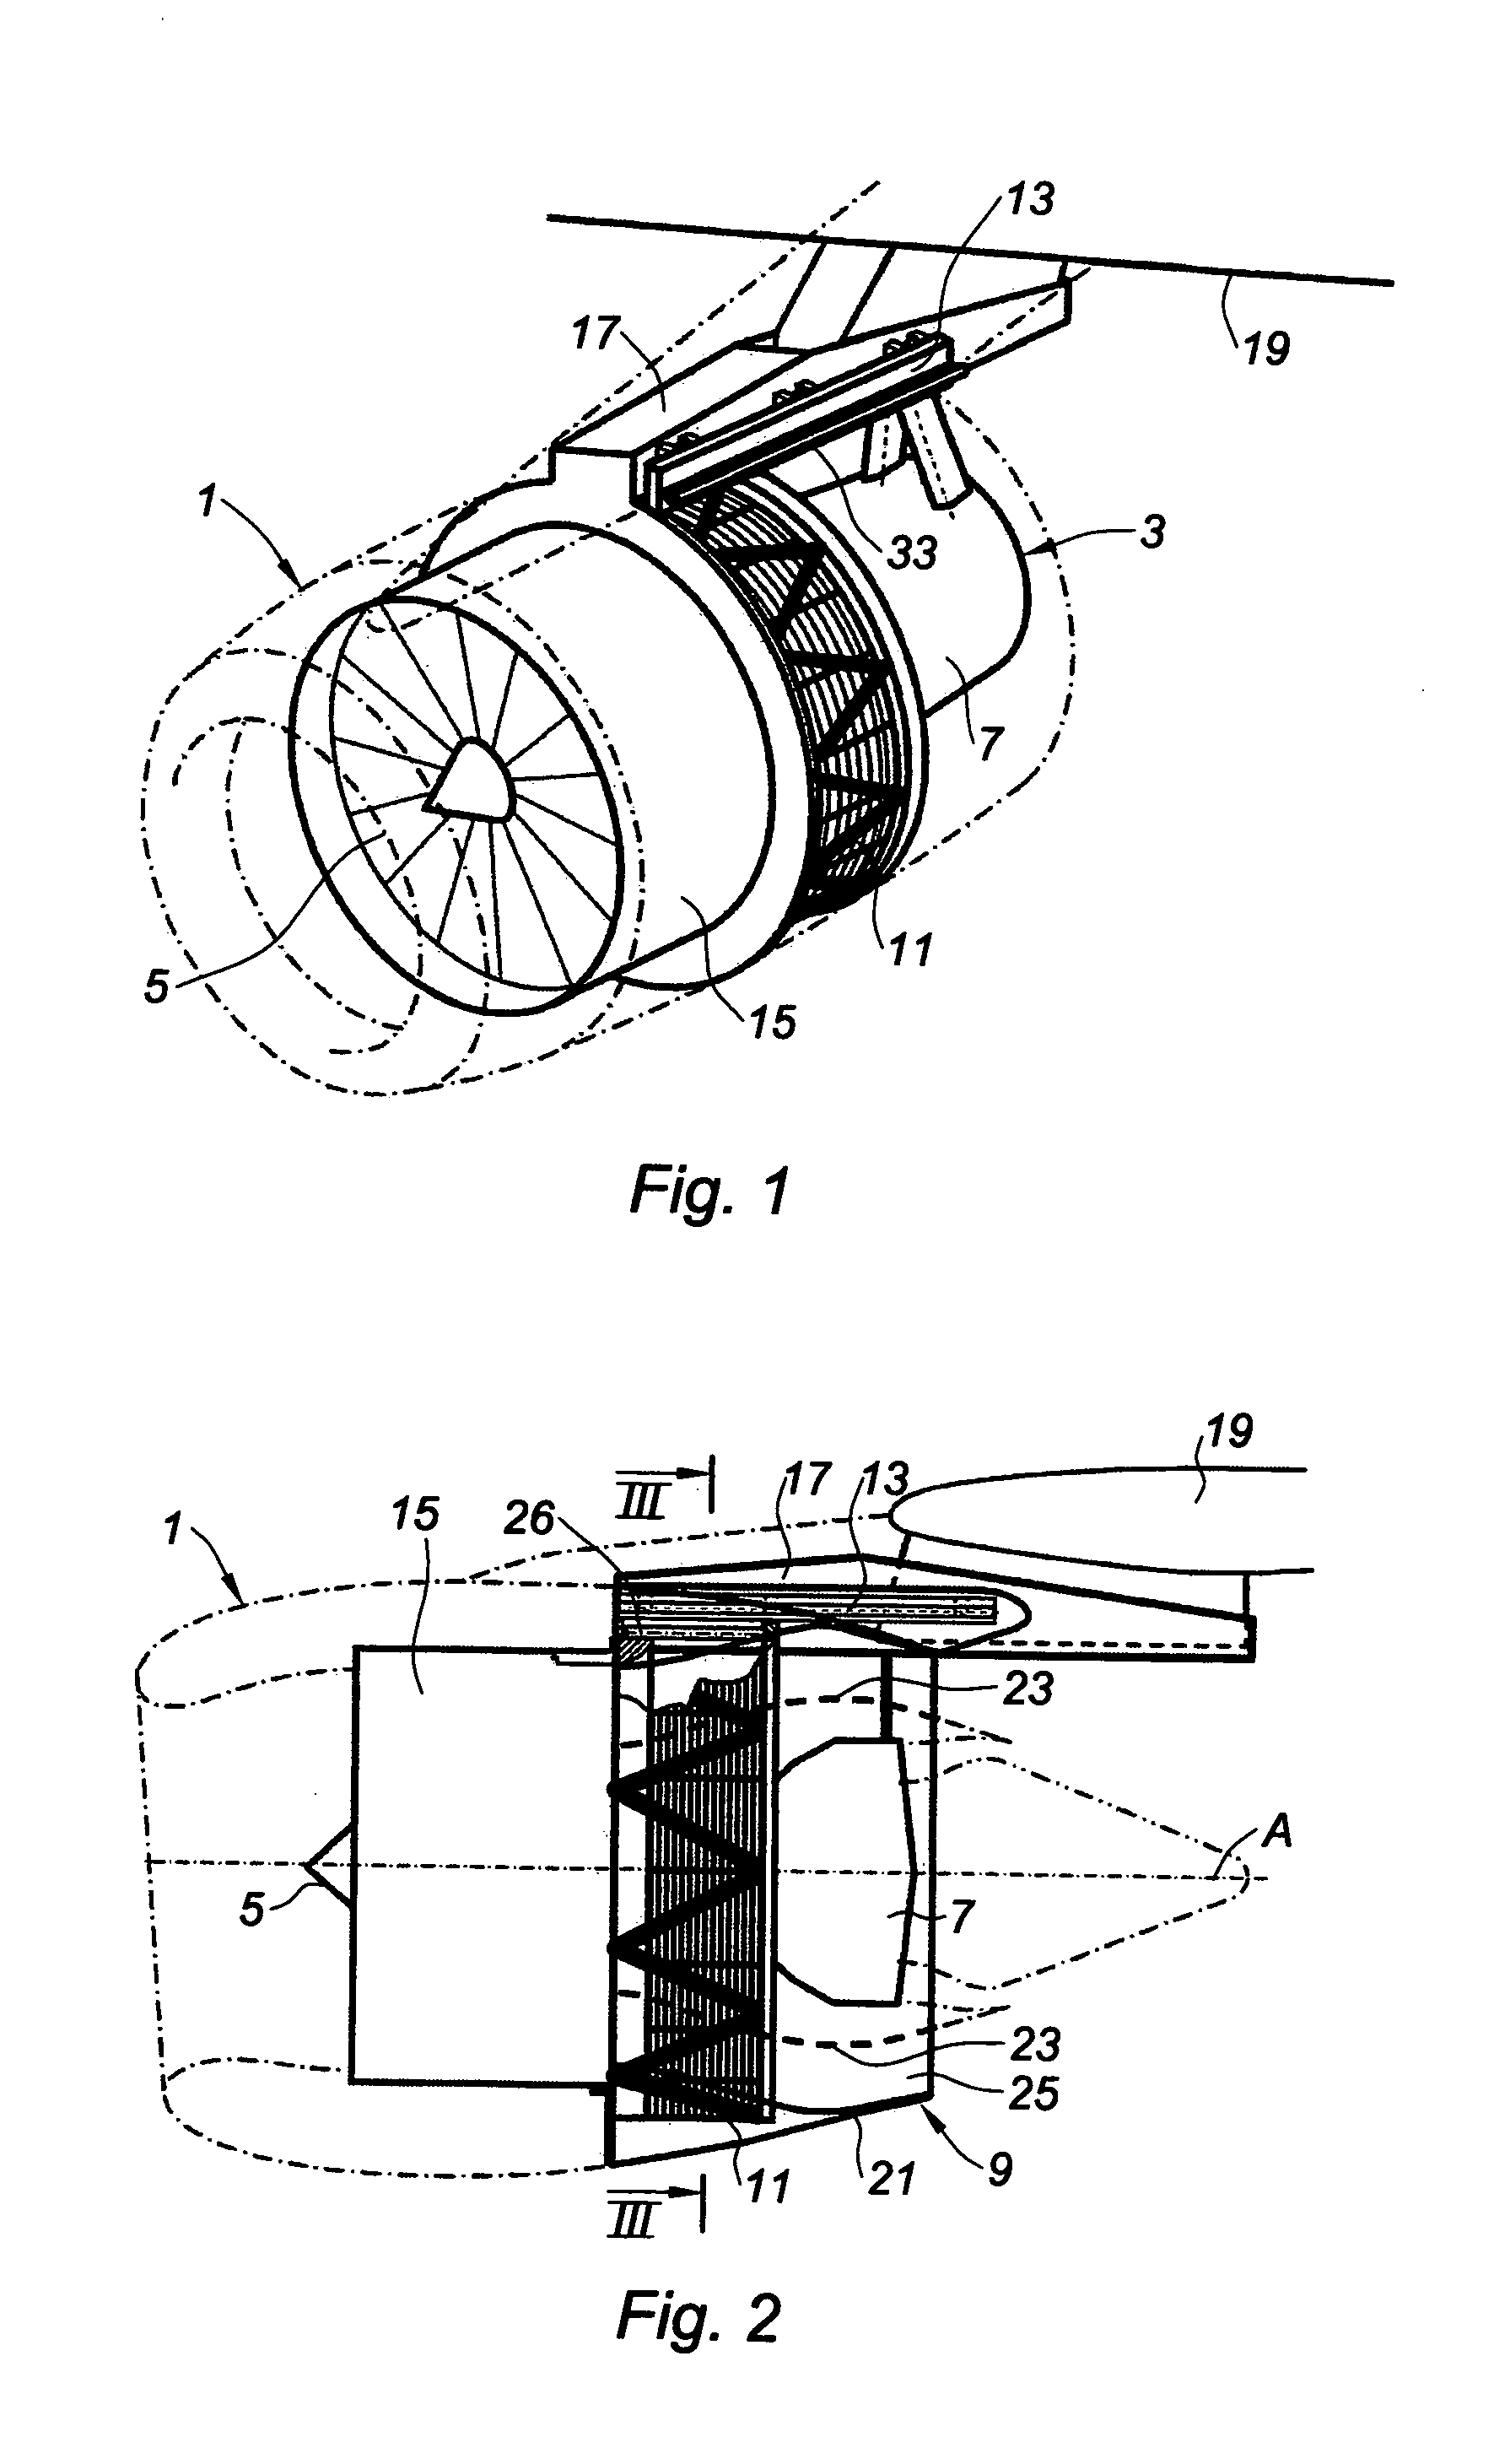 Thrust reverser for a jet engine